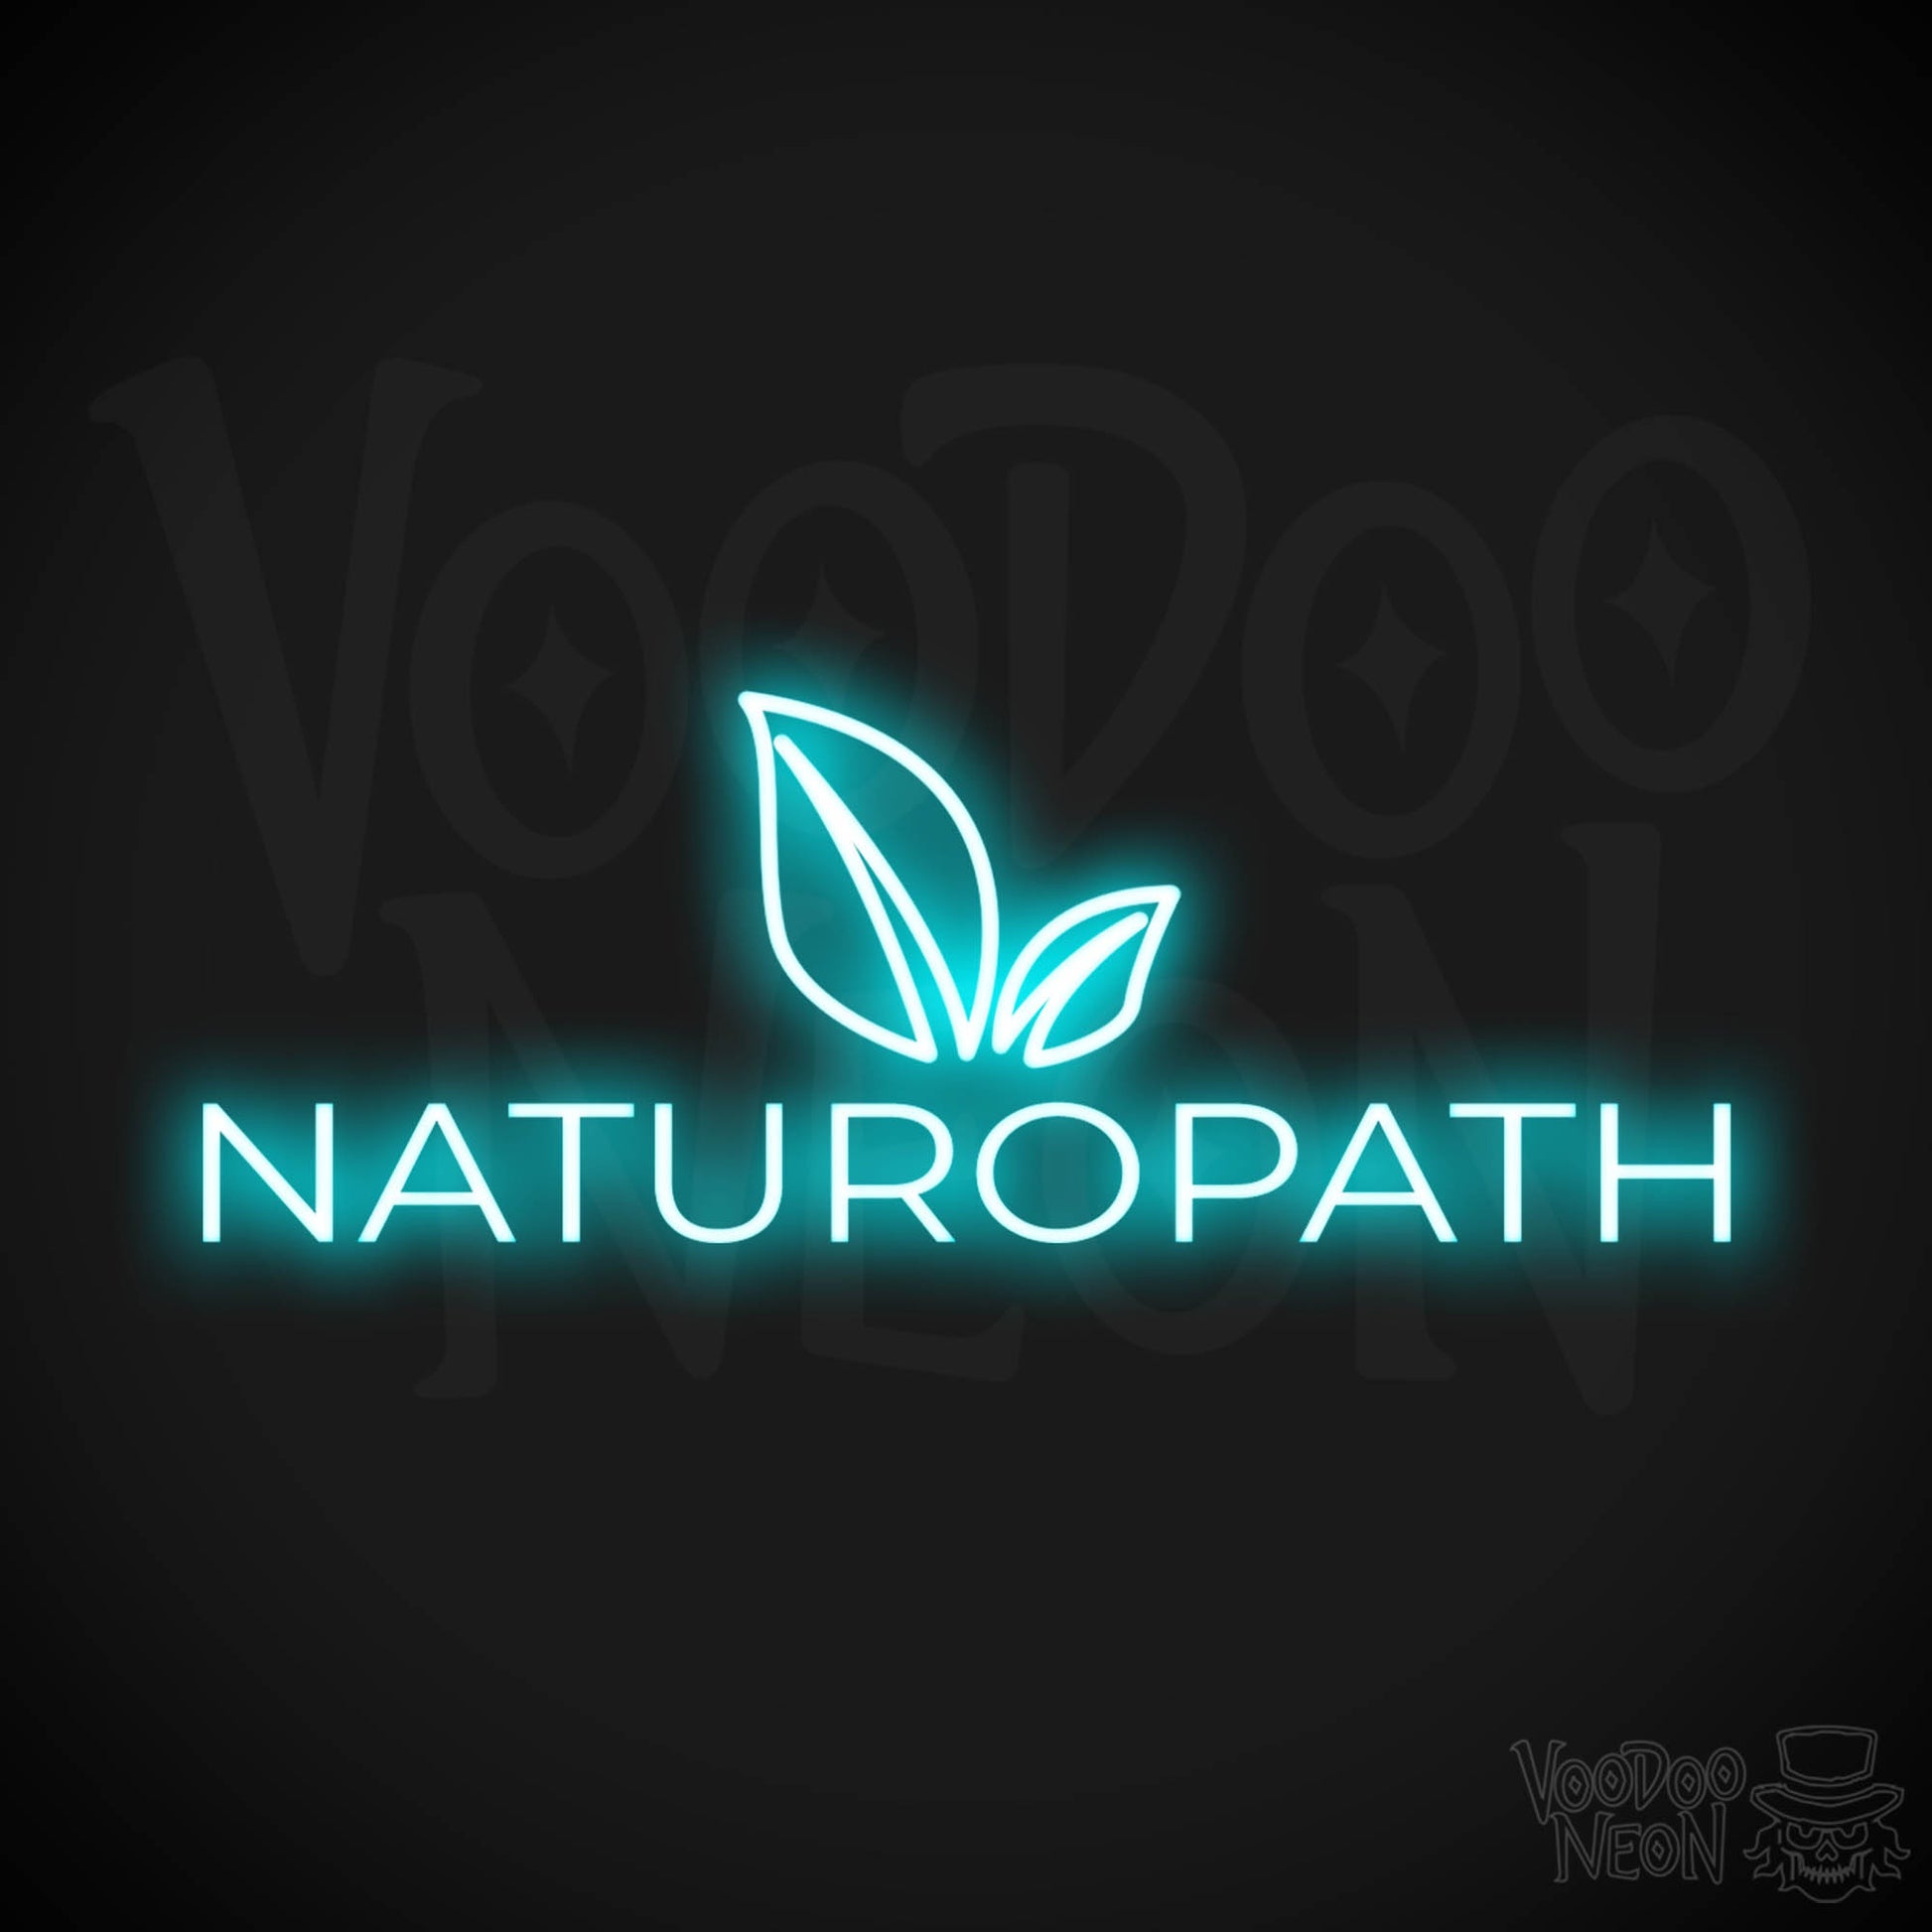 Naturopath LED Neon - Ice Blue